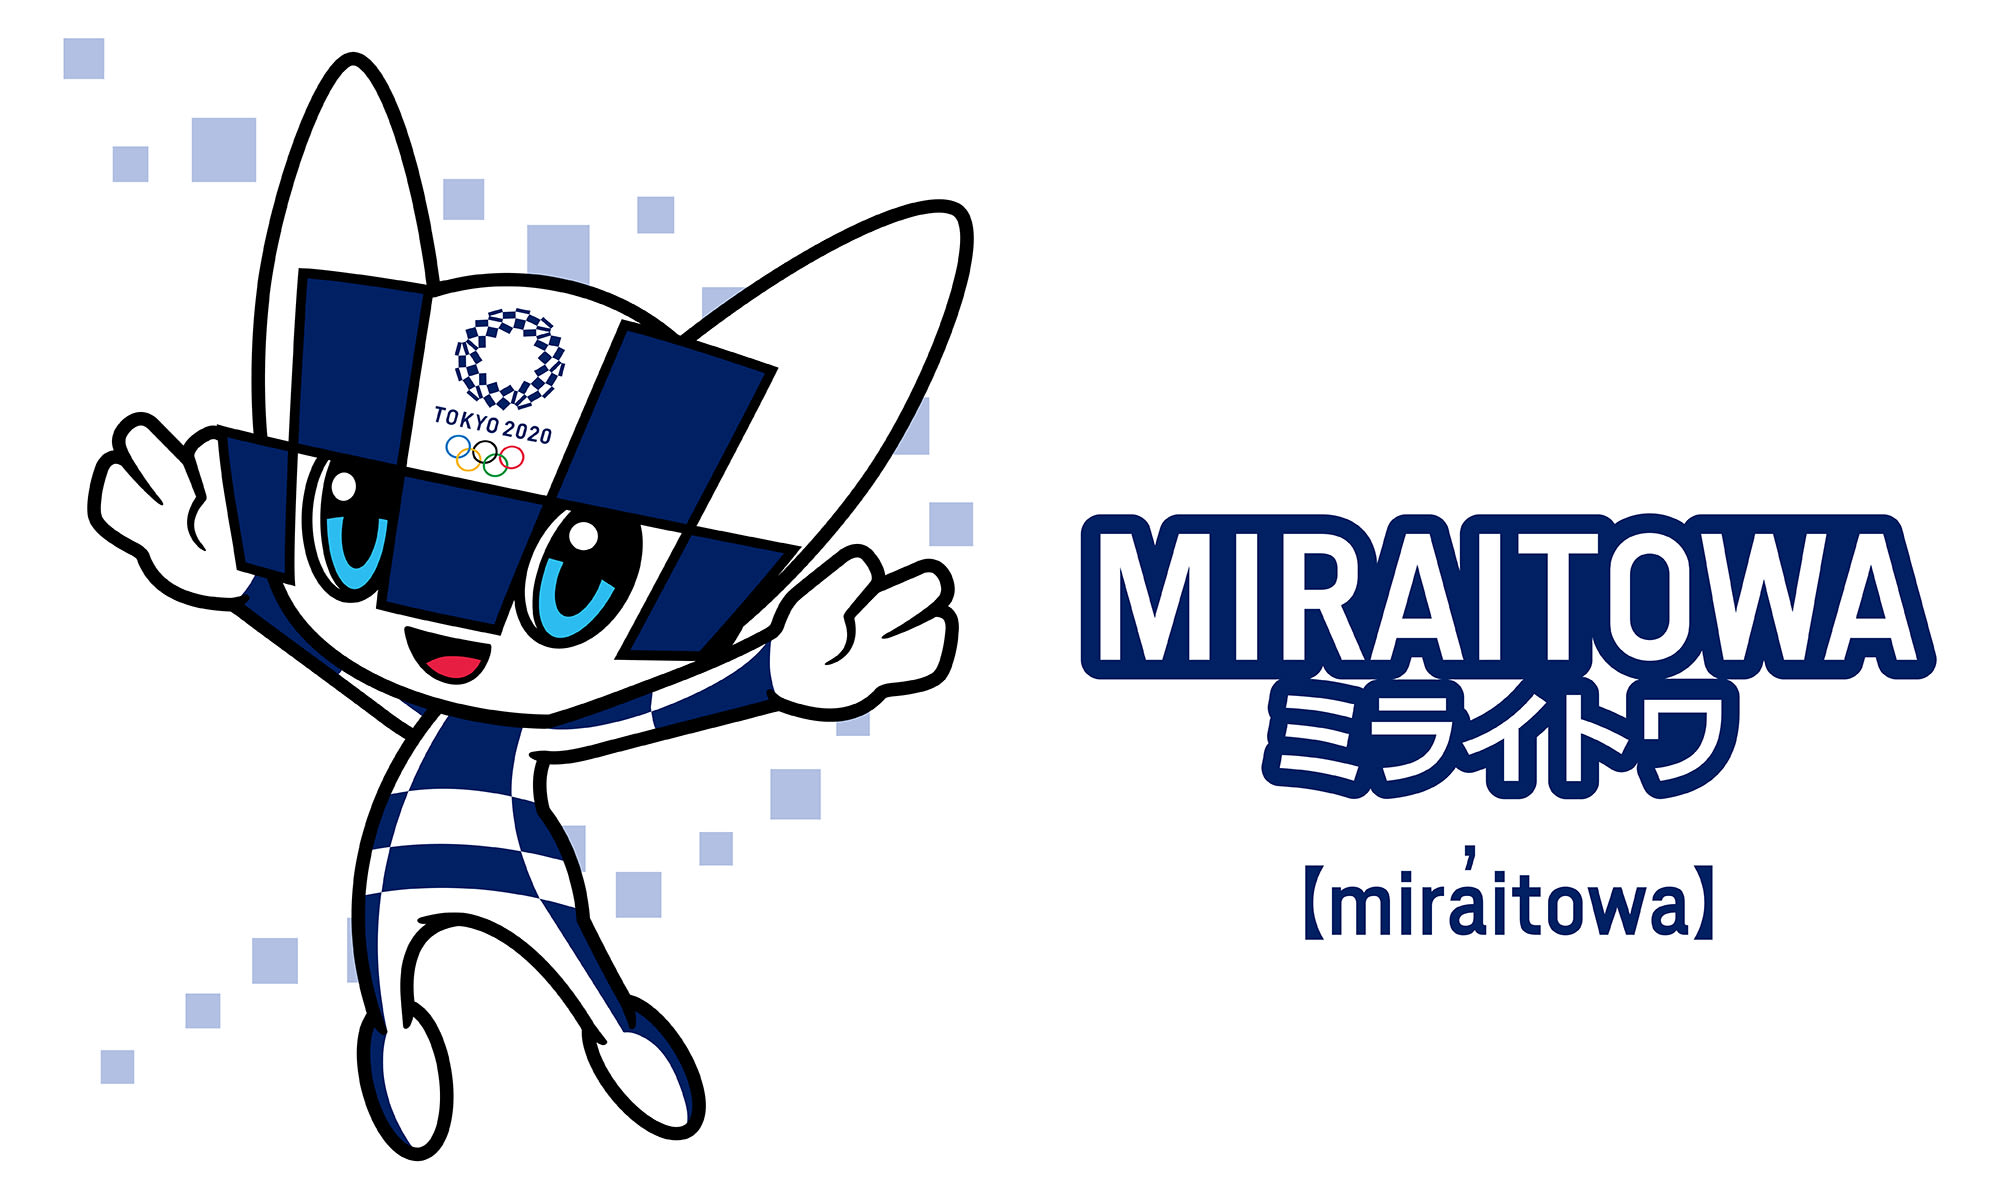 Olympics Mascot - Meet Miraitowa at the Tokyo 2020 Games